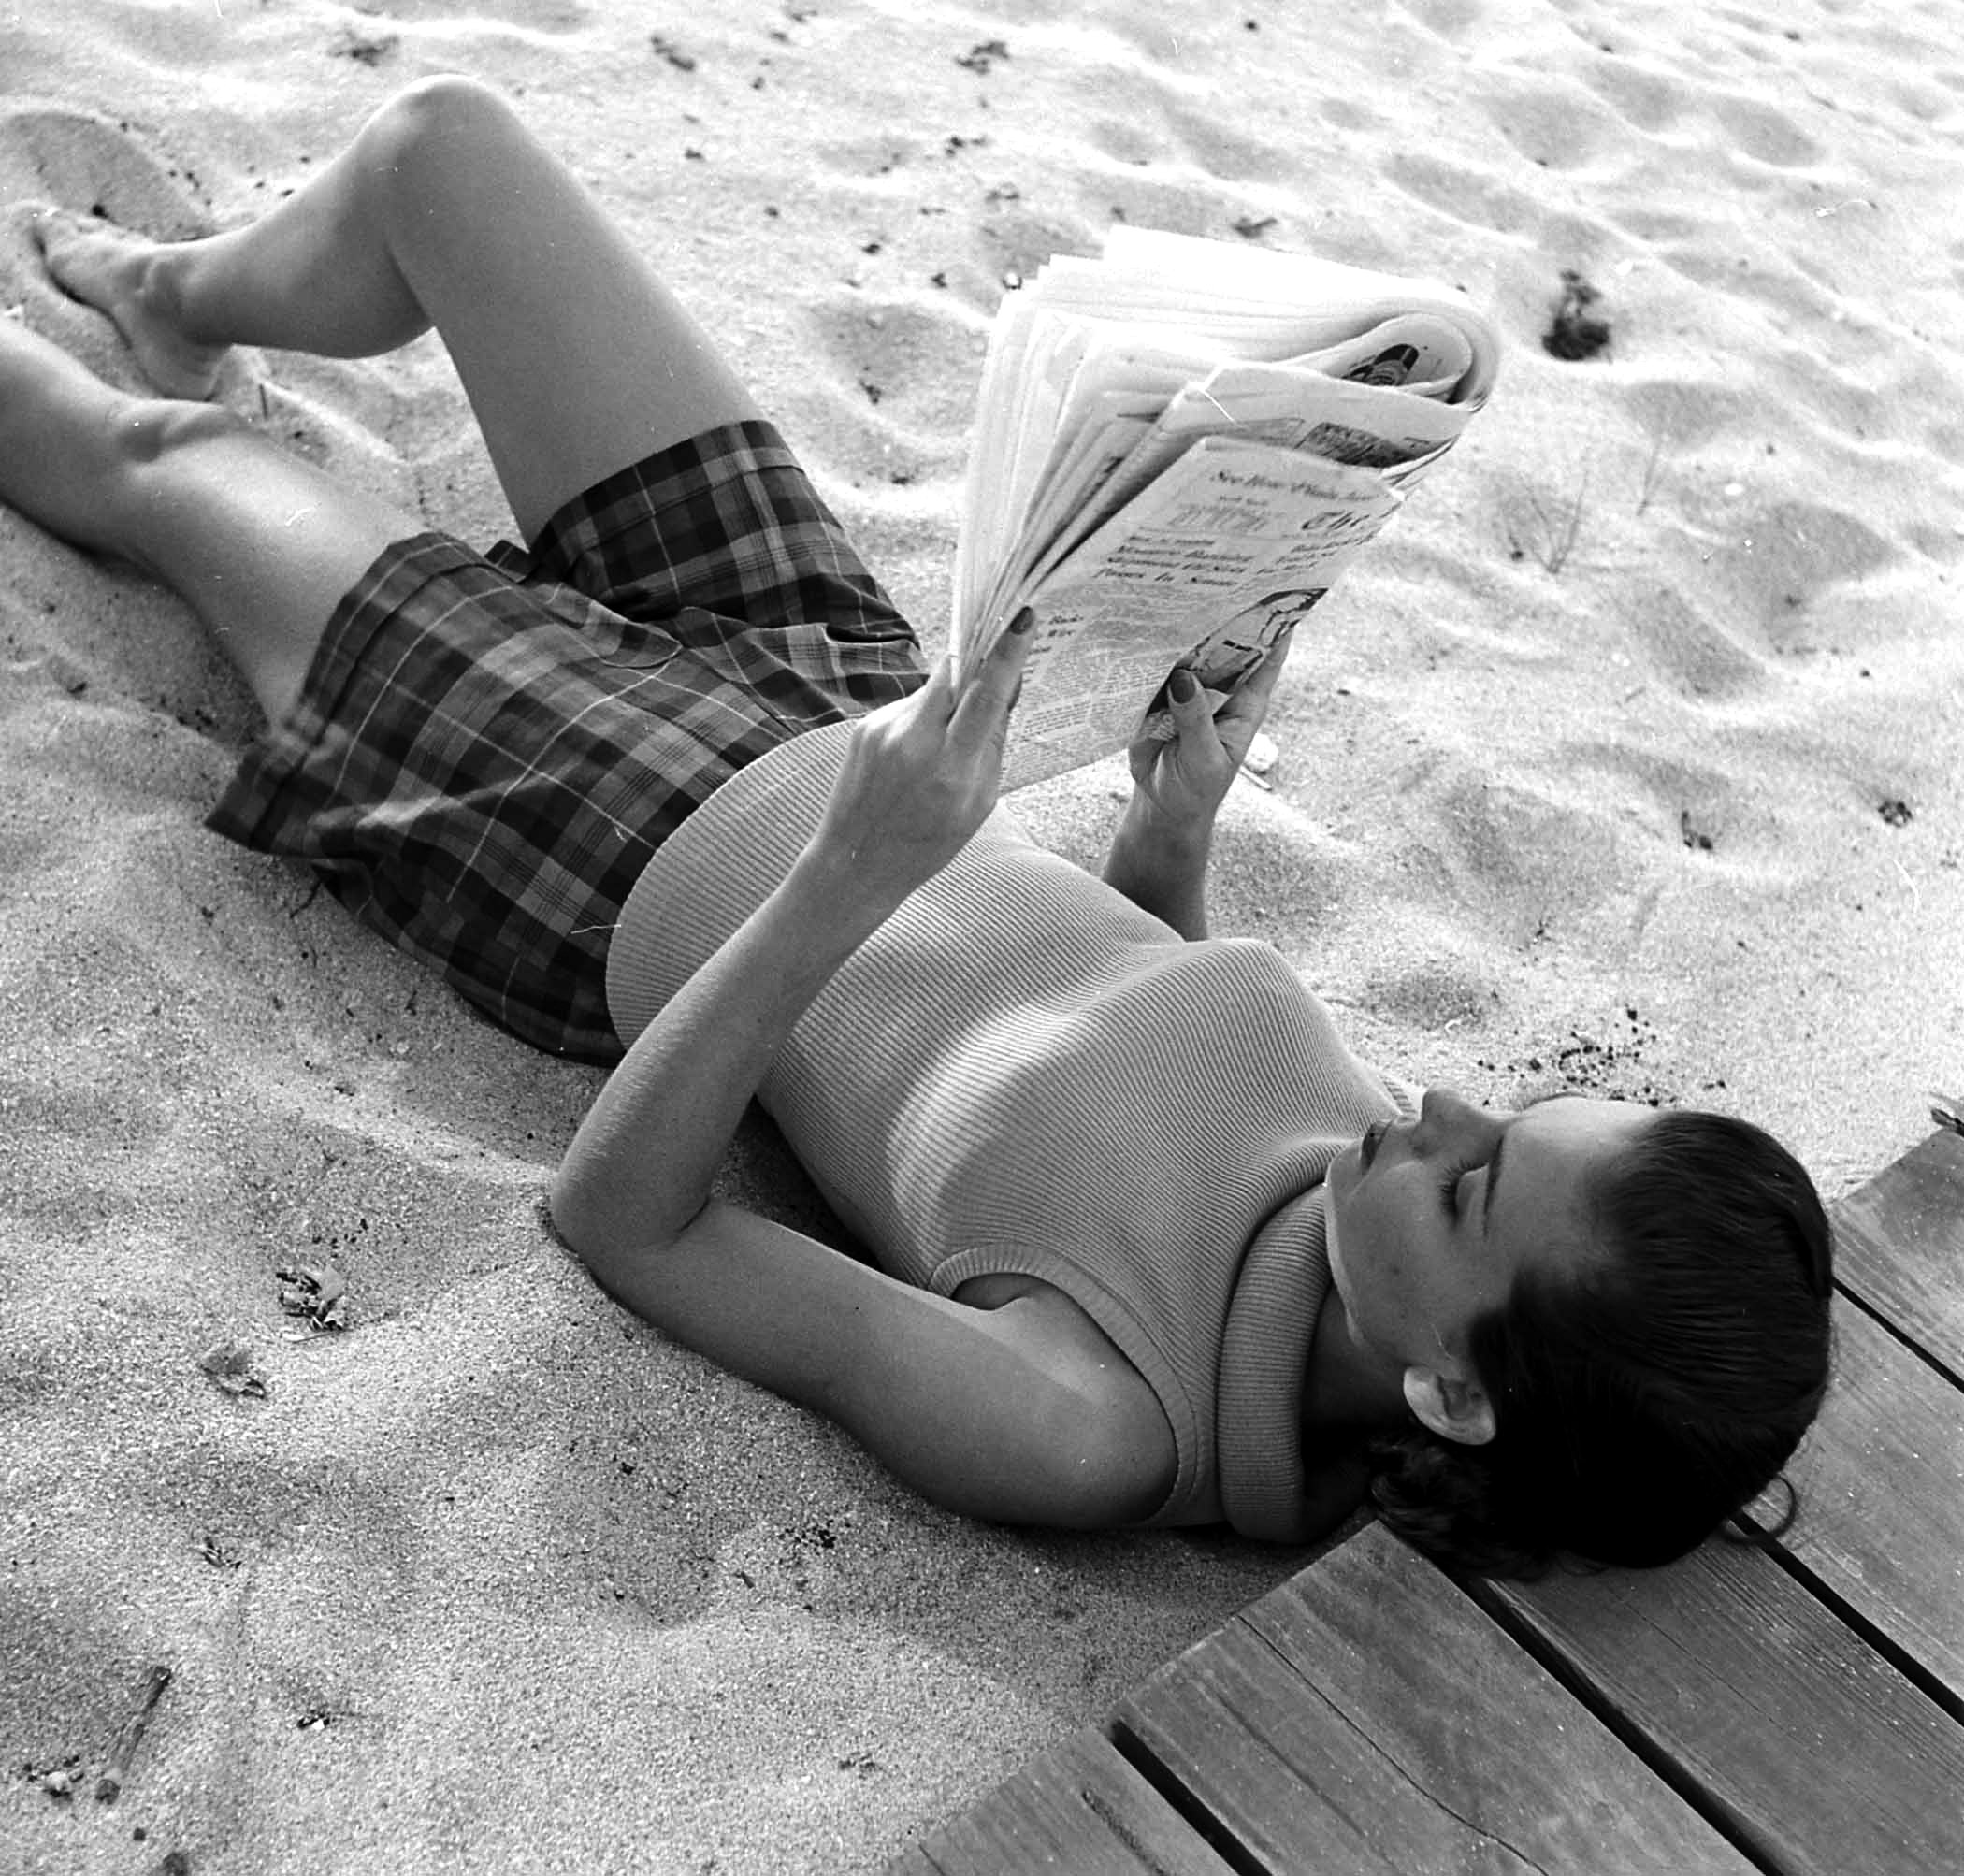 Beach fashion in Florida, 1950.